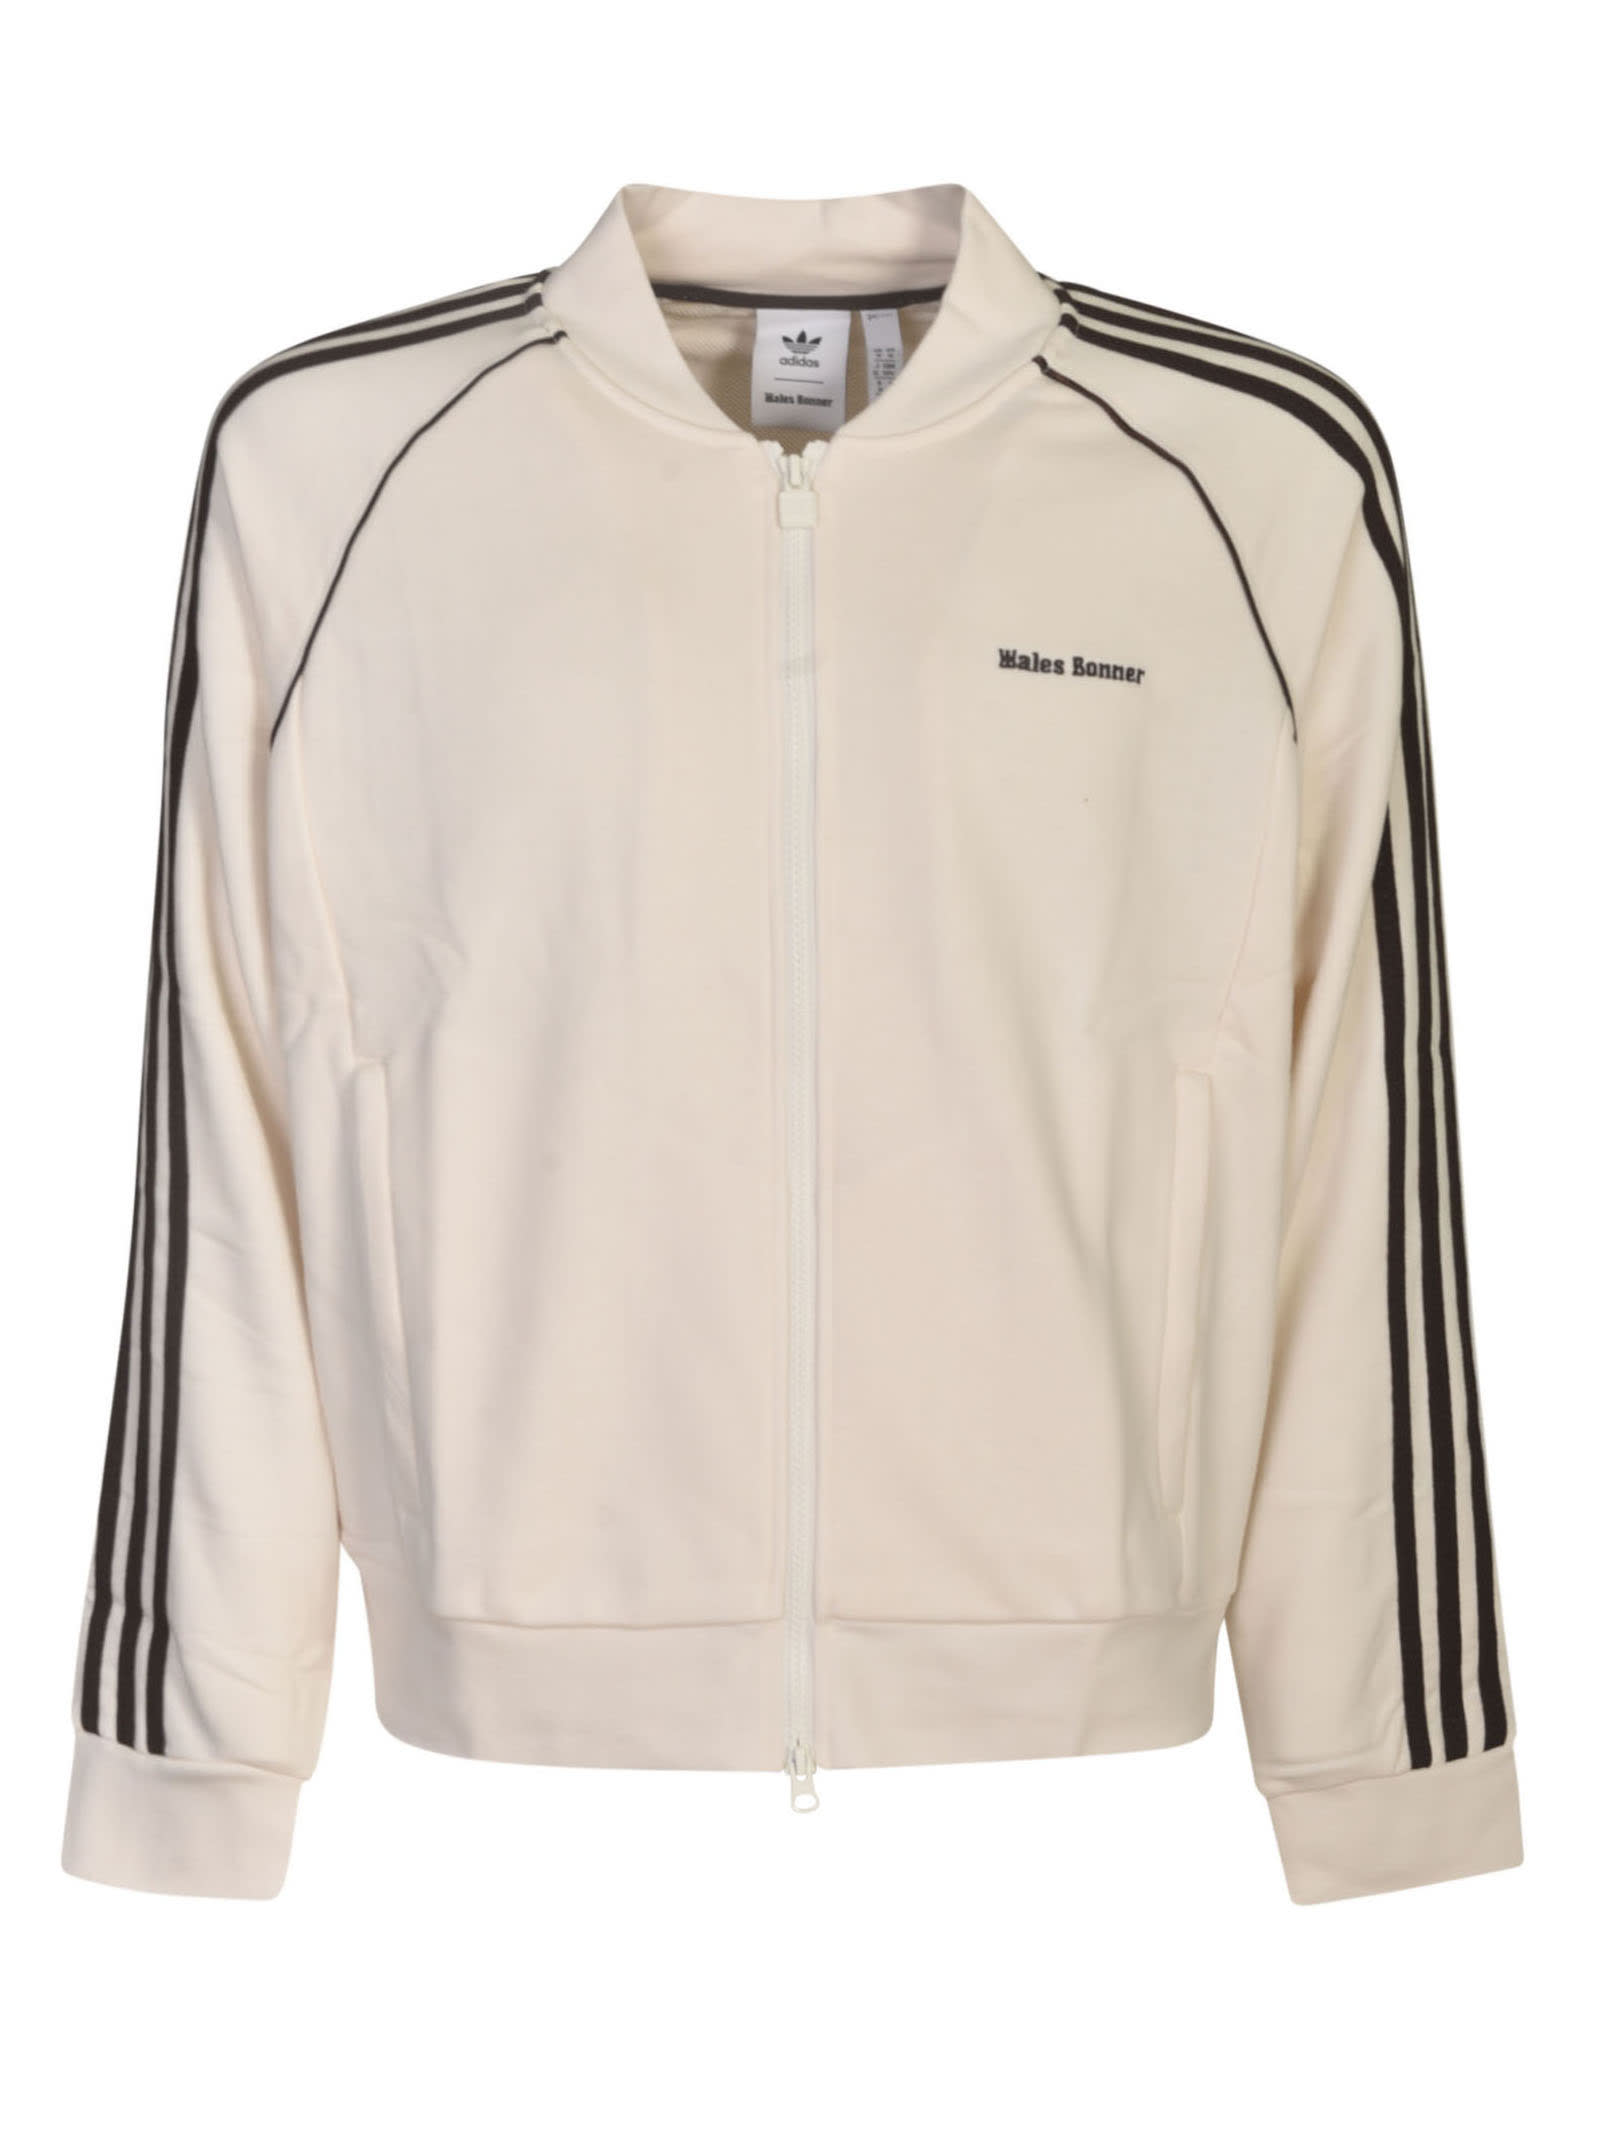 Adidas Originals by Wales Bonner Stripe Jacket - White - unisex - Size: Medium